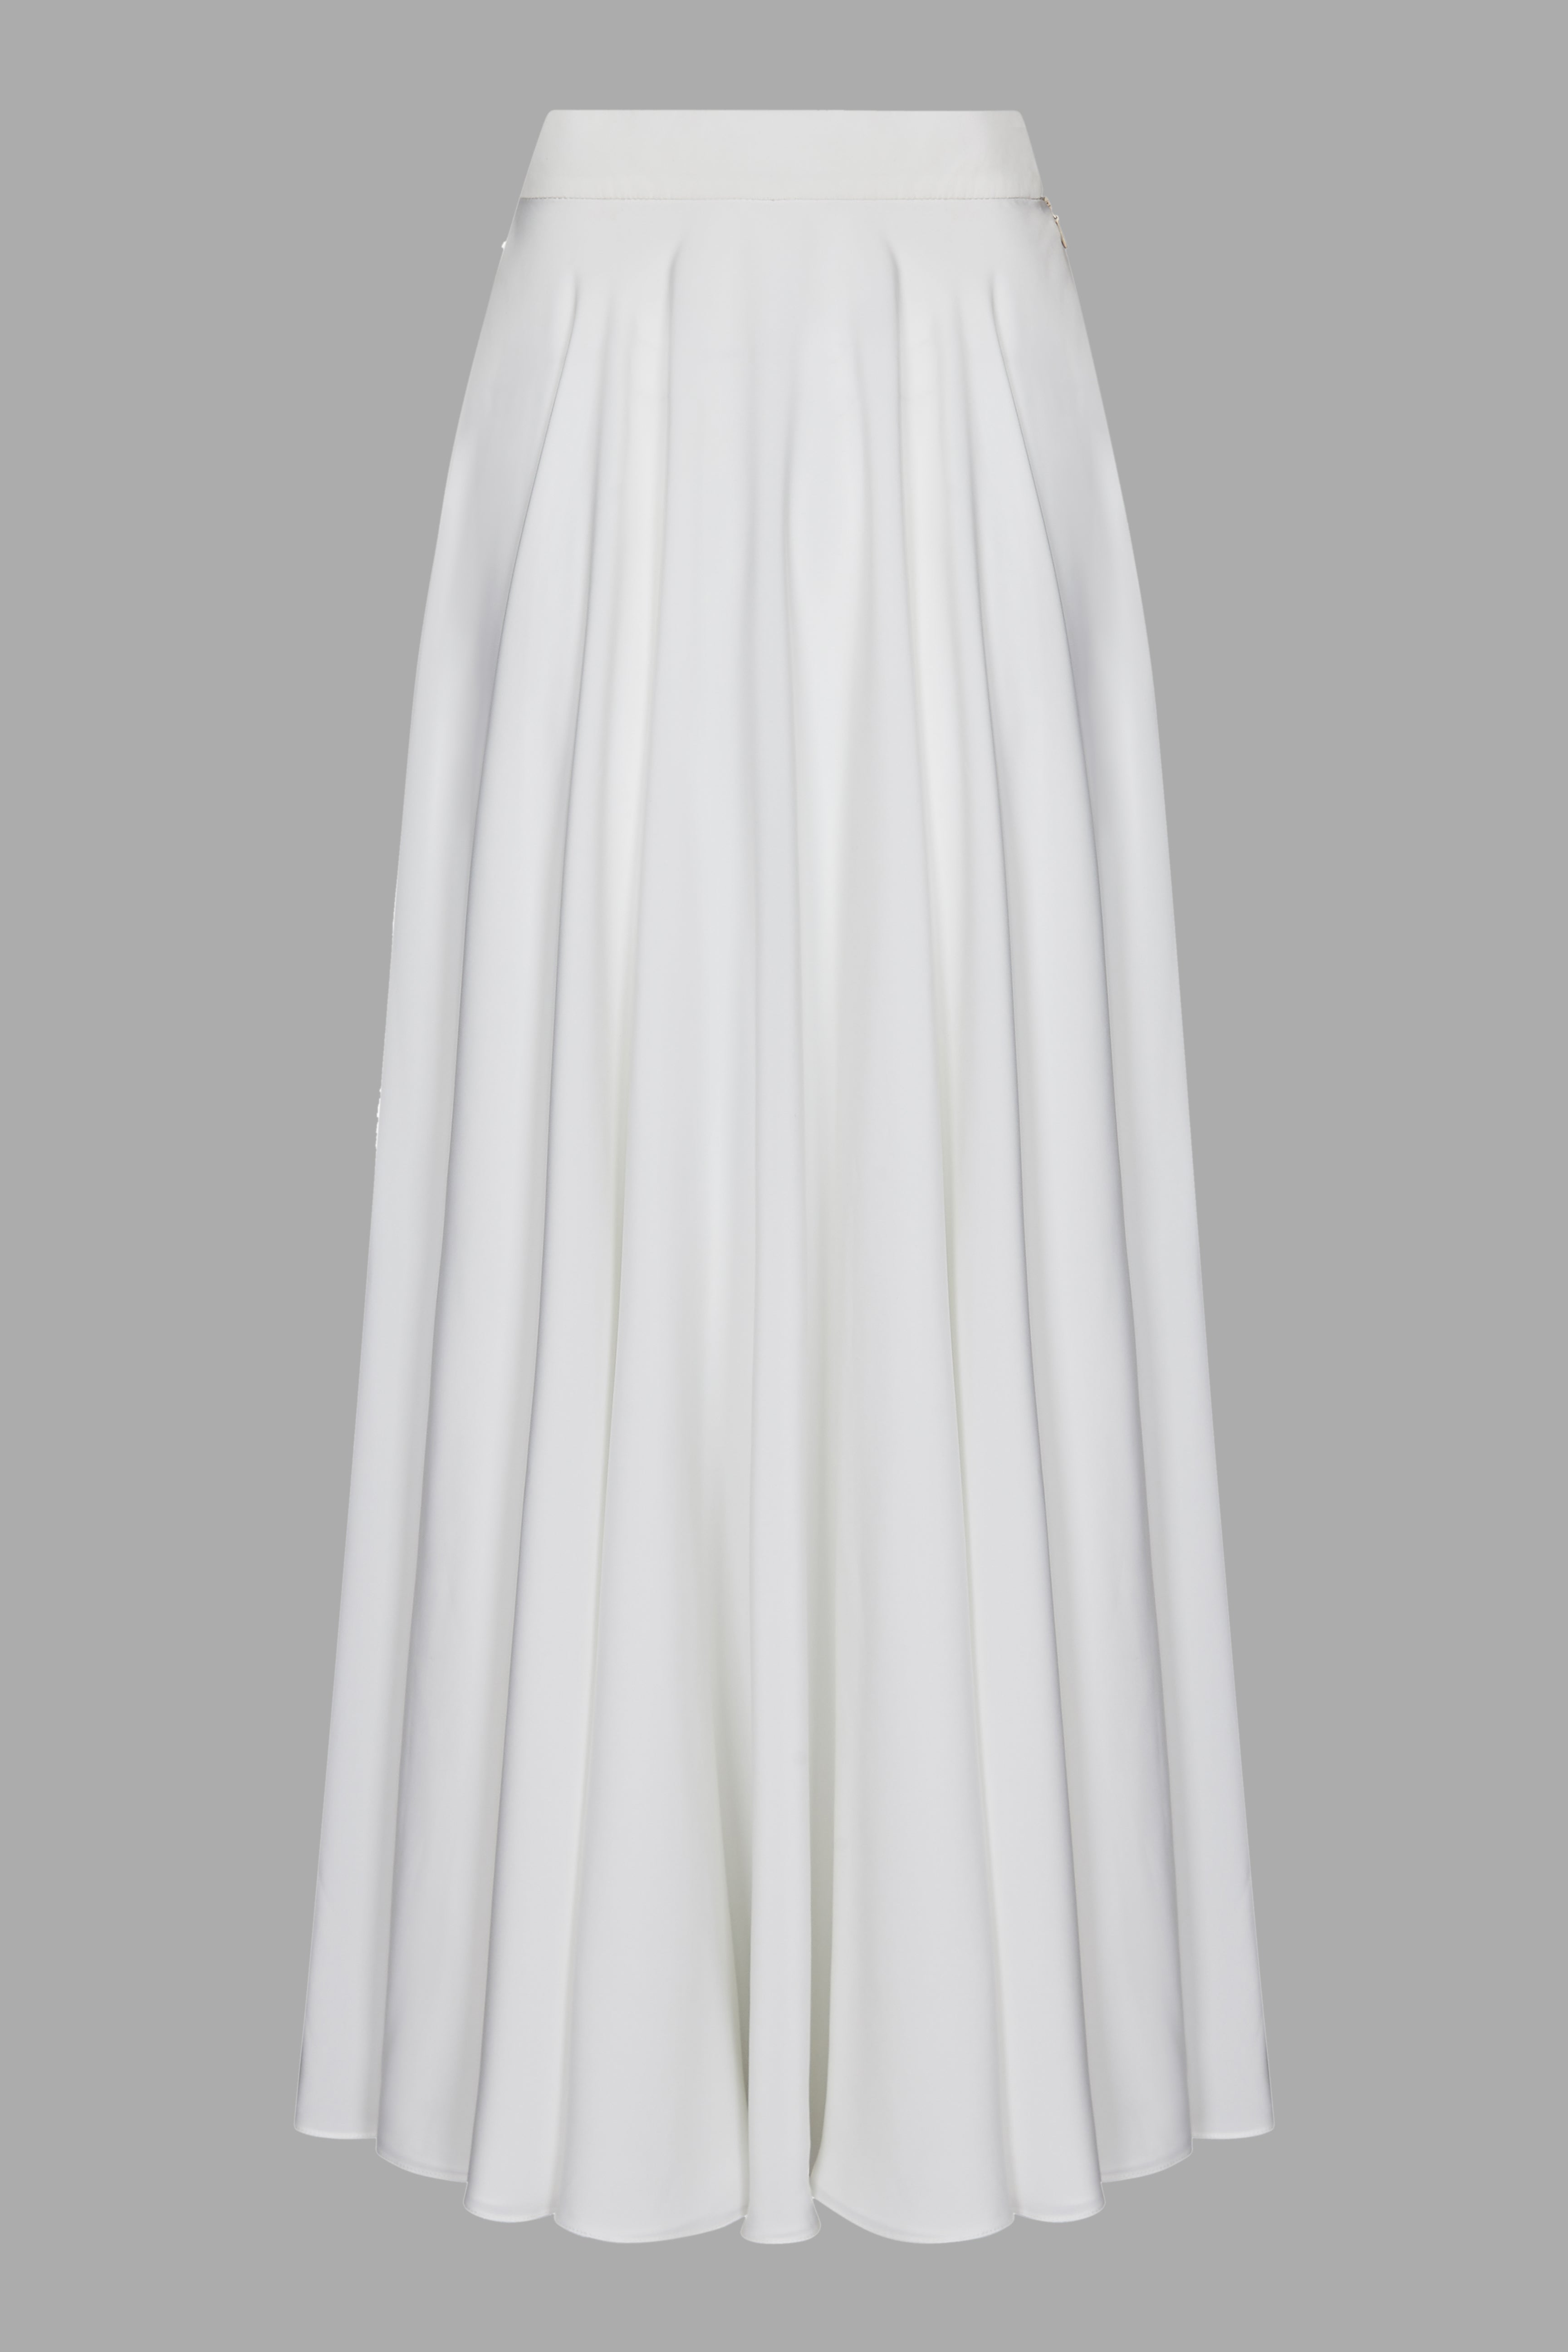 Classic White High Waisted Evening Skirt UME London